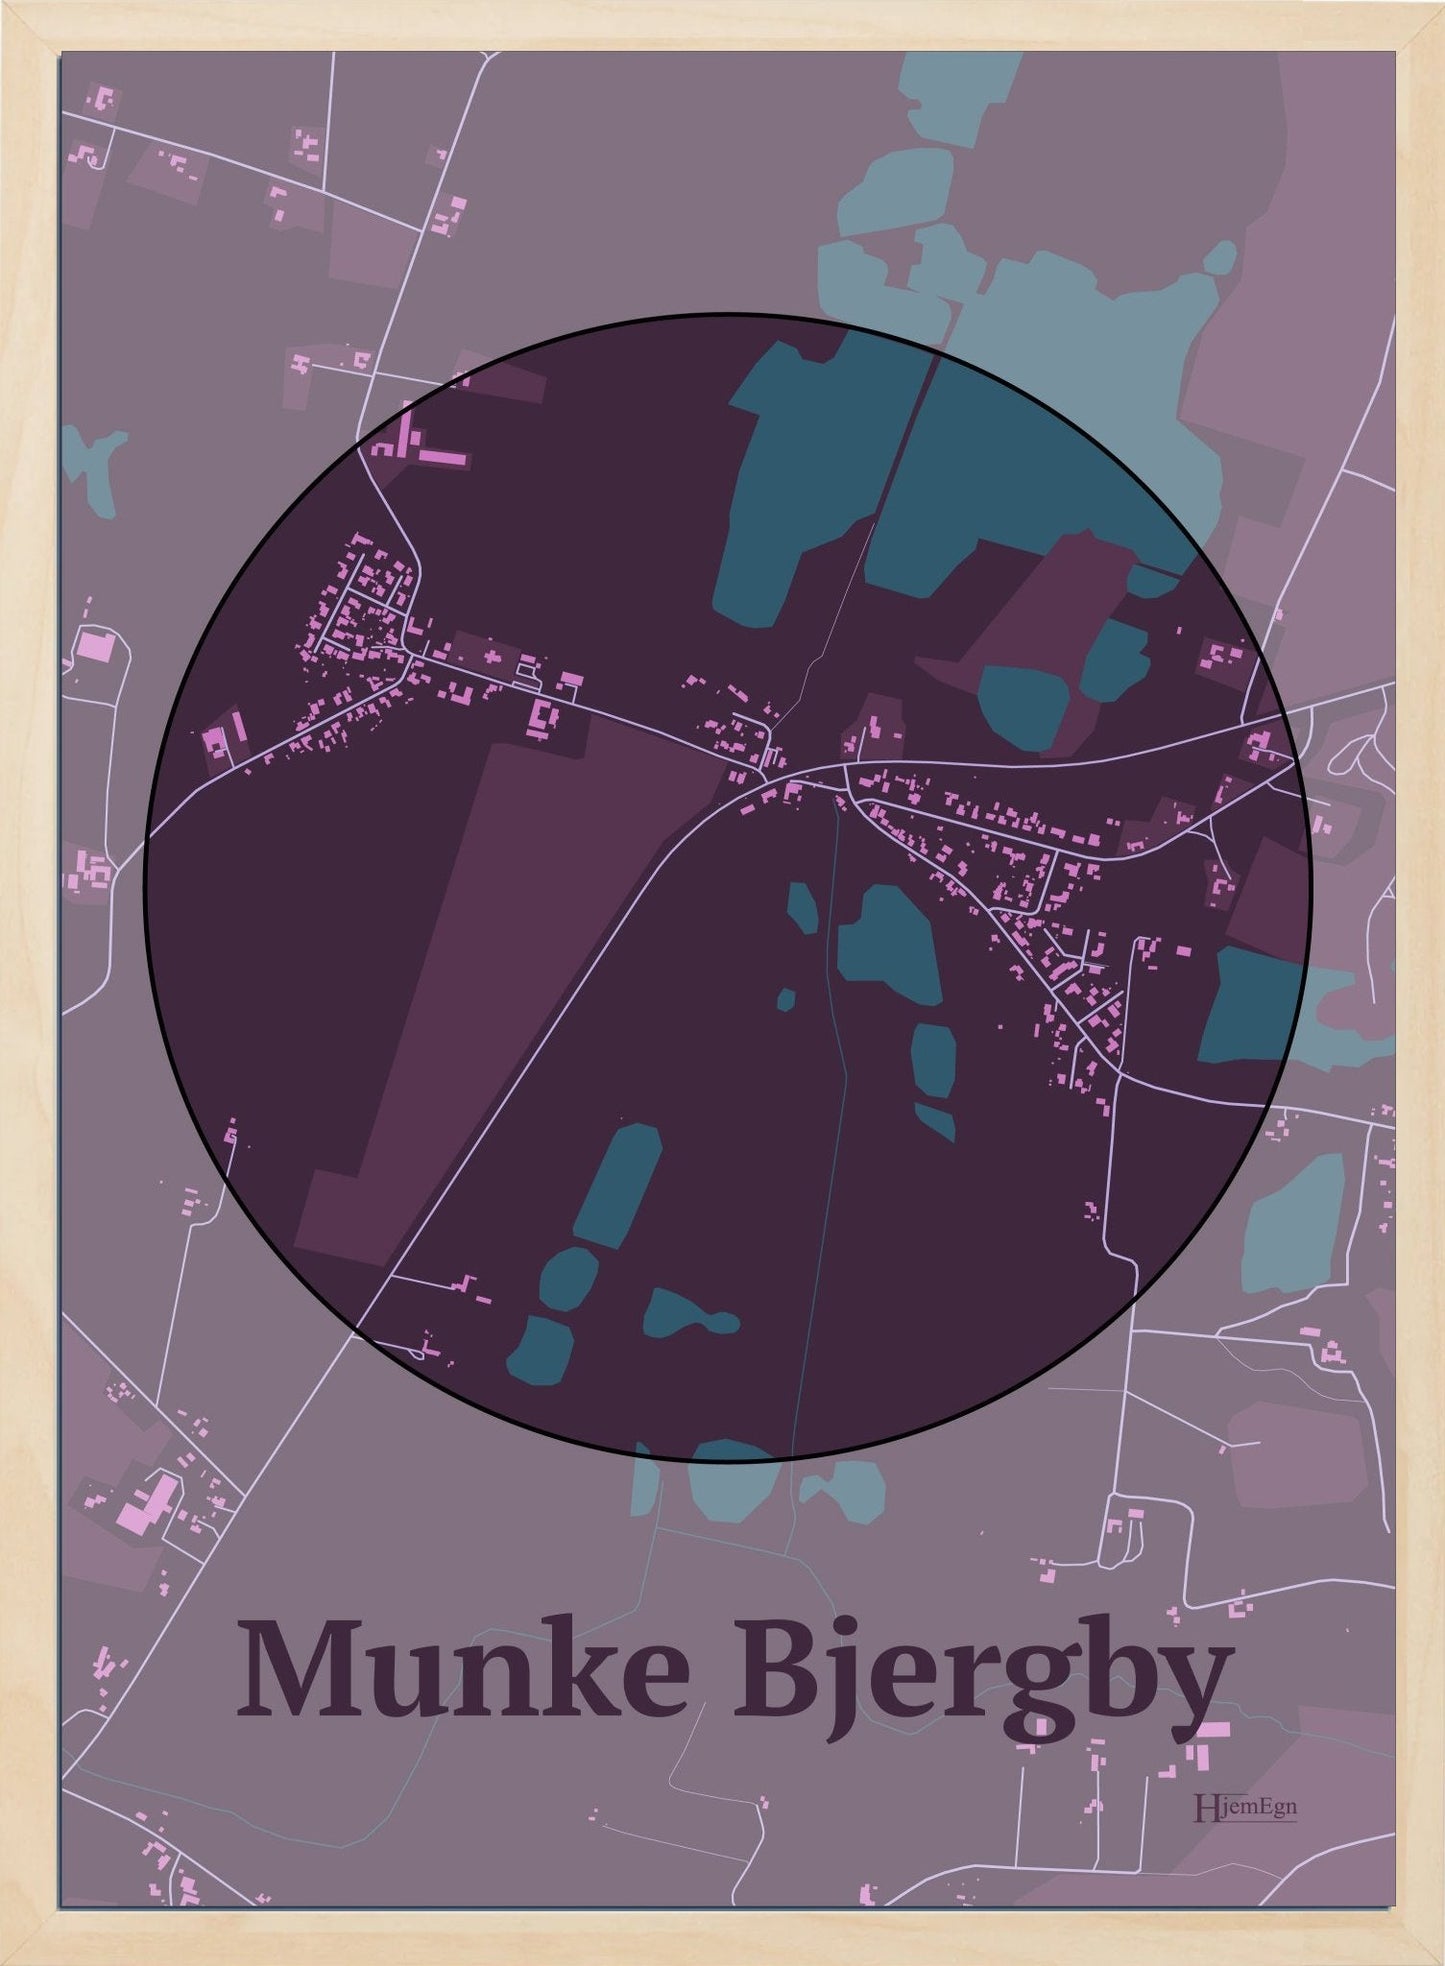 Munke Bjergby plakat i farve mørk rød og HjemEgn.dk design centrum. Design bykort for Munke Bjergby